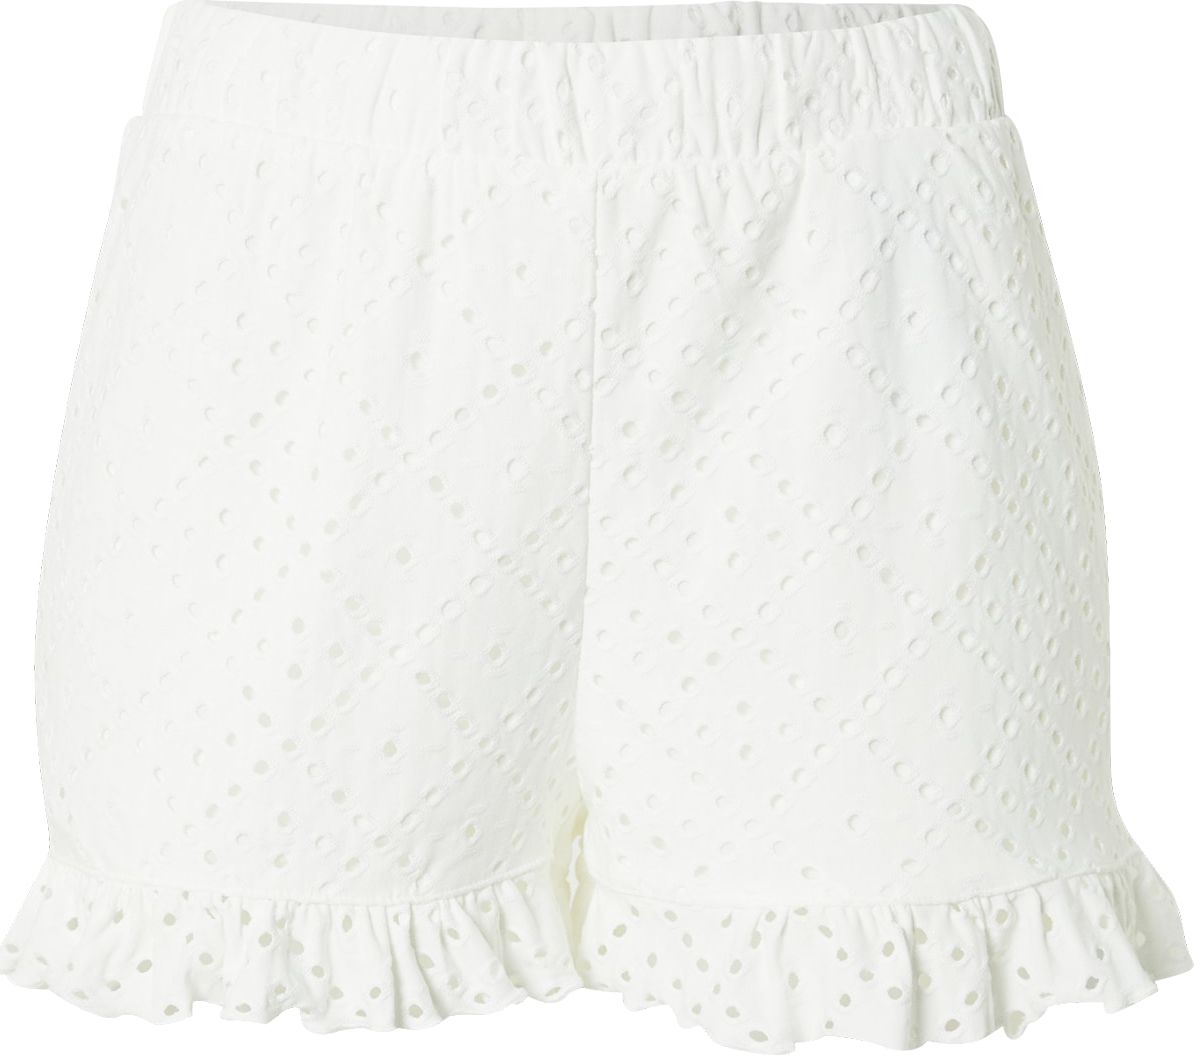 Kalhoty 'TASSA' Vero Moda bílá / přírodní bílá